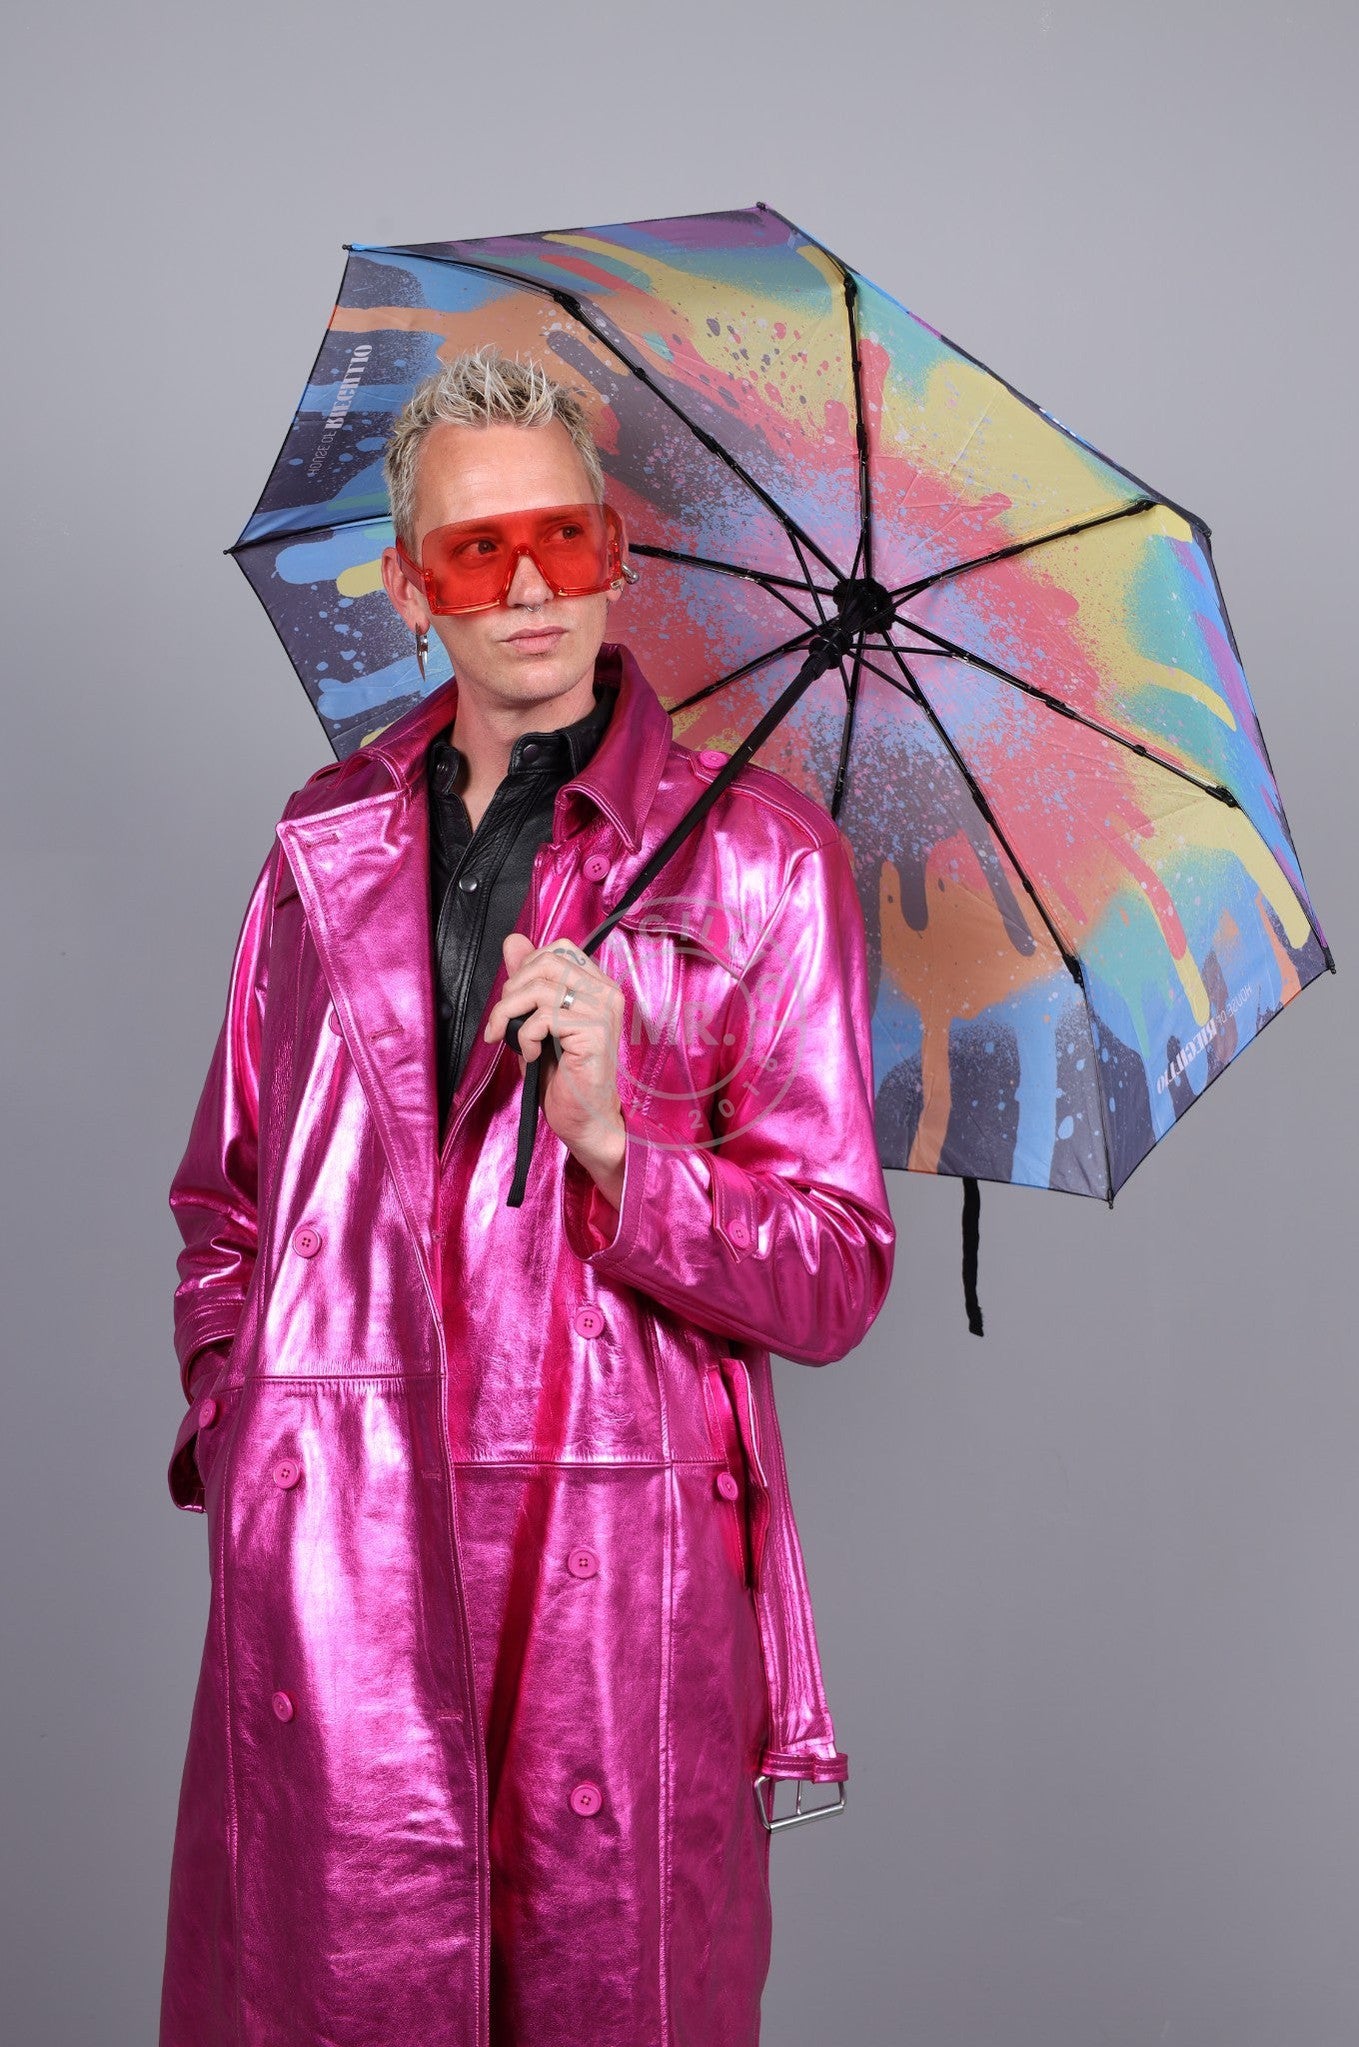 Metallic Leather Trench Coat - Pink at MR. Riegillio